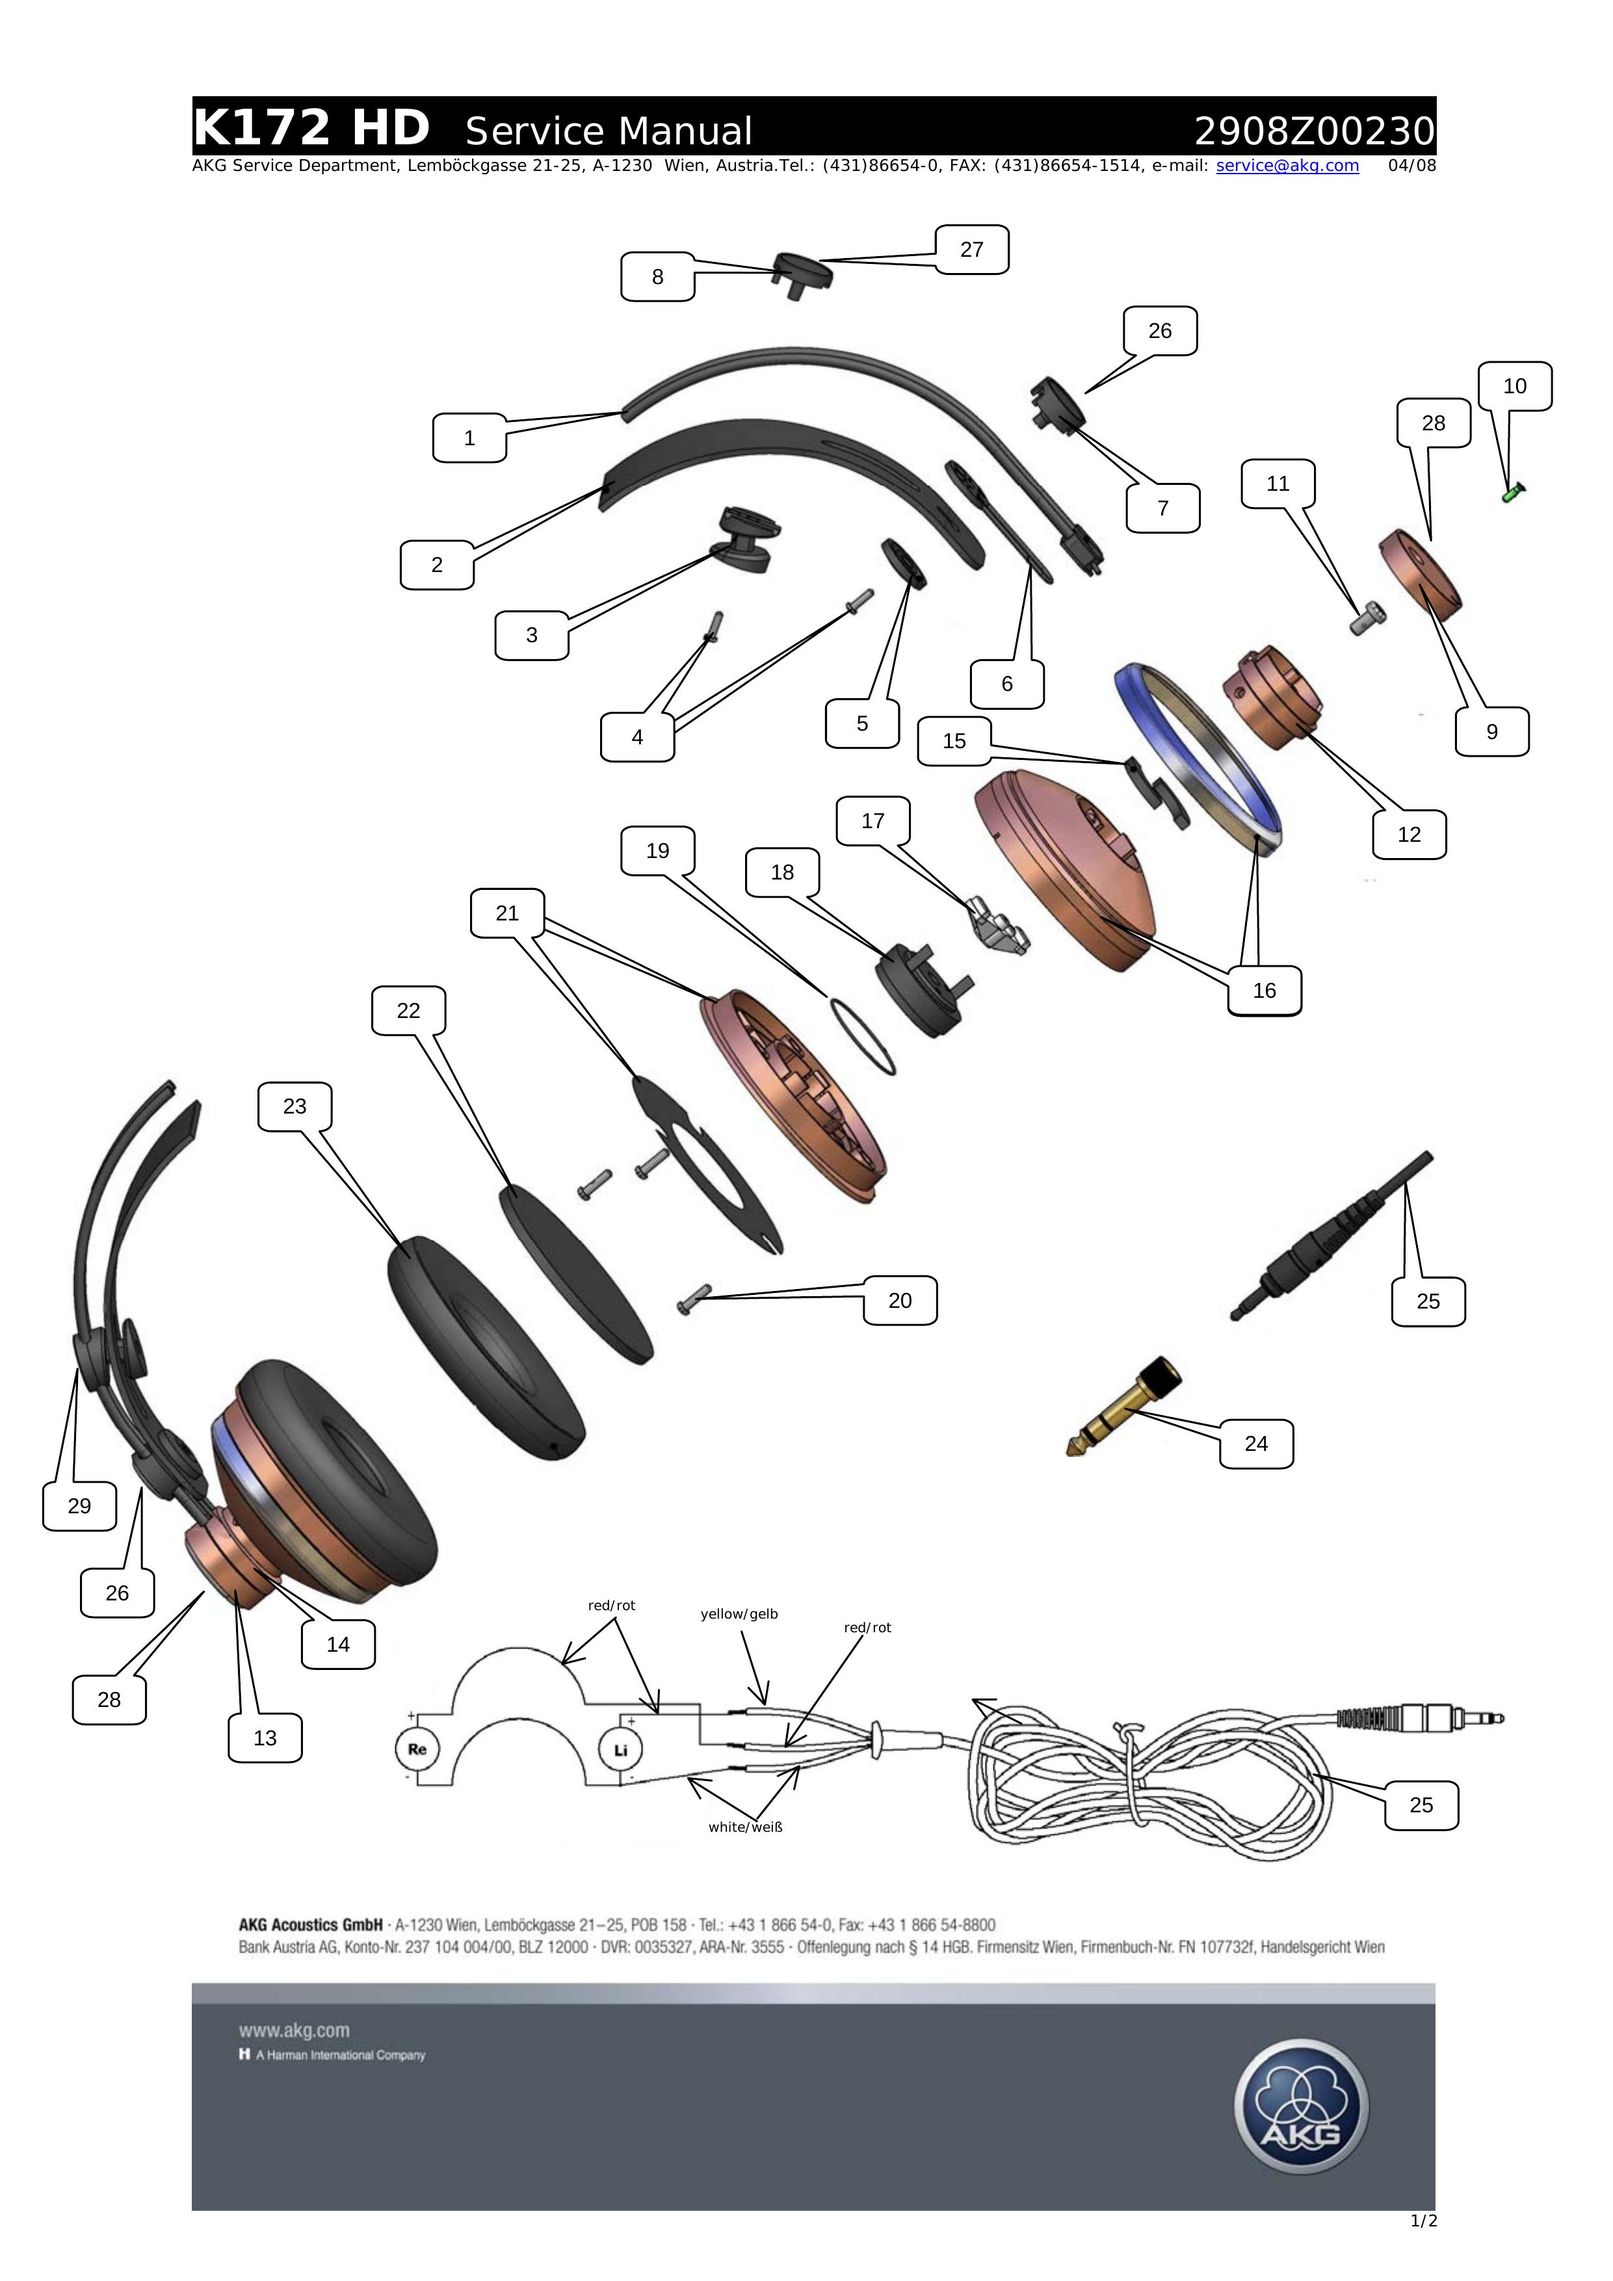 AKG Acoustics K172 HD Headphones User Manual